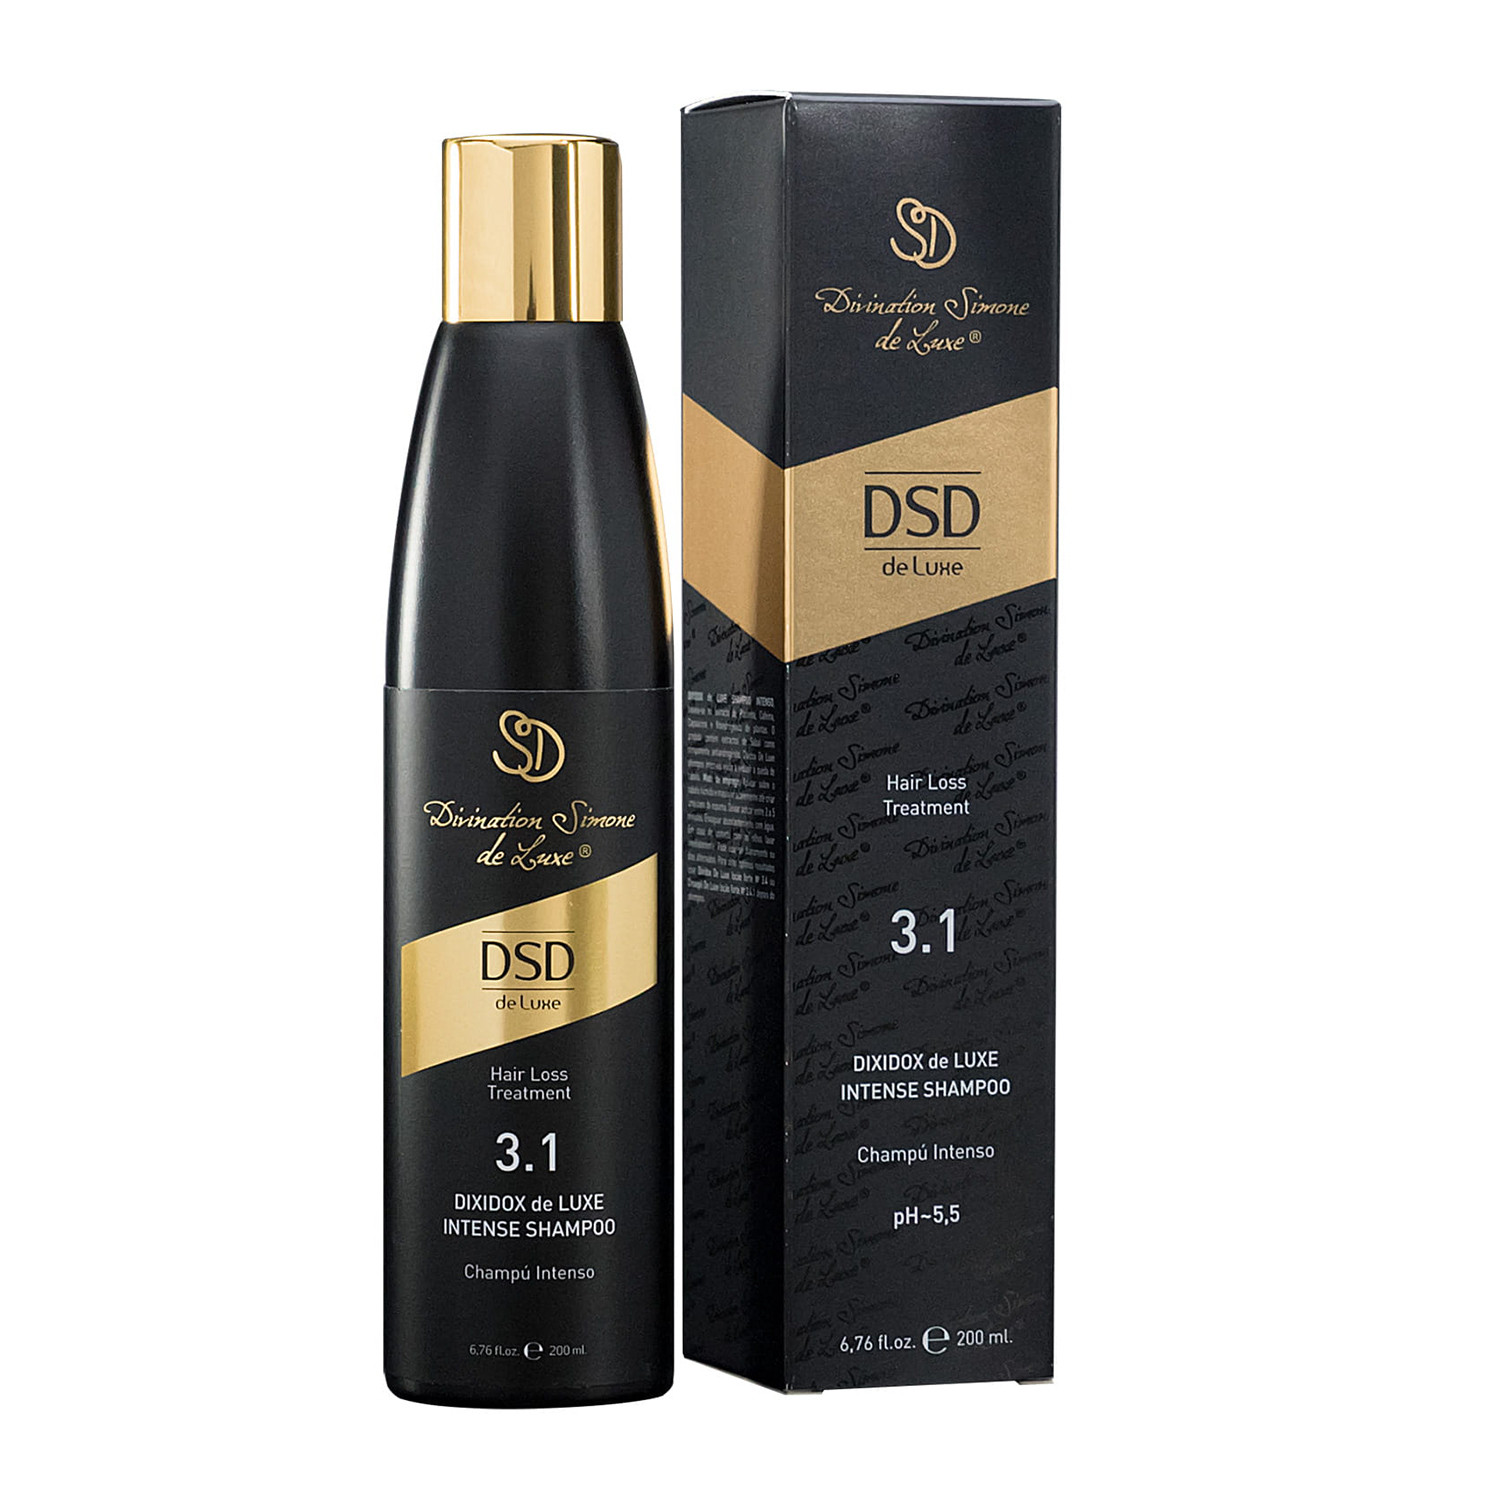 DSD de Luxe 3.1 - Интенсивный шампунь